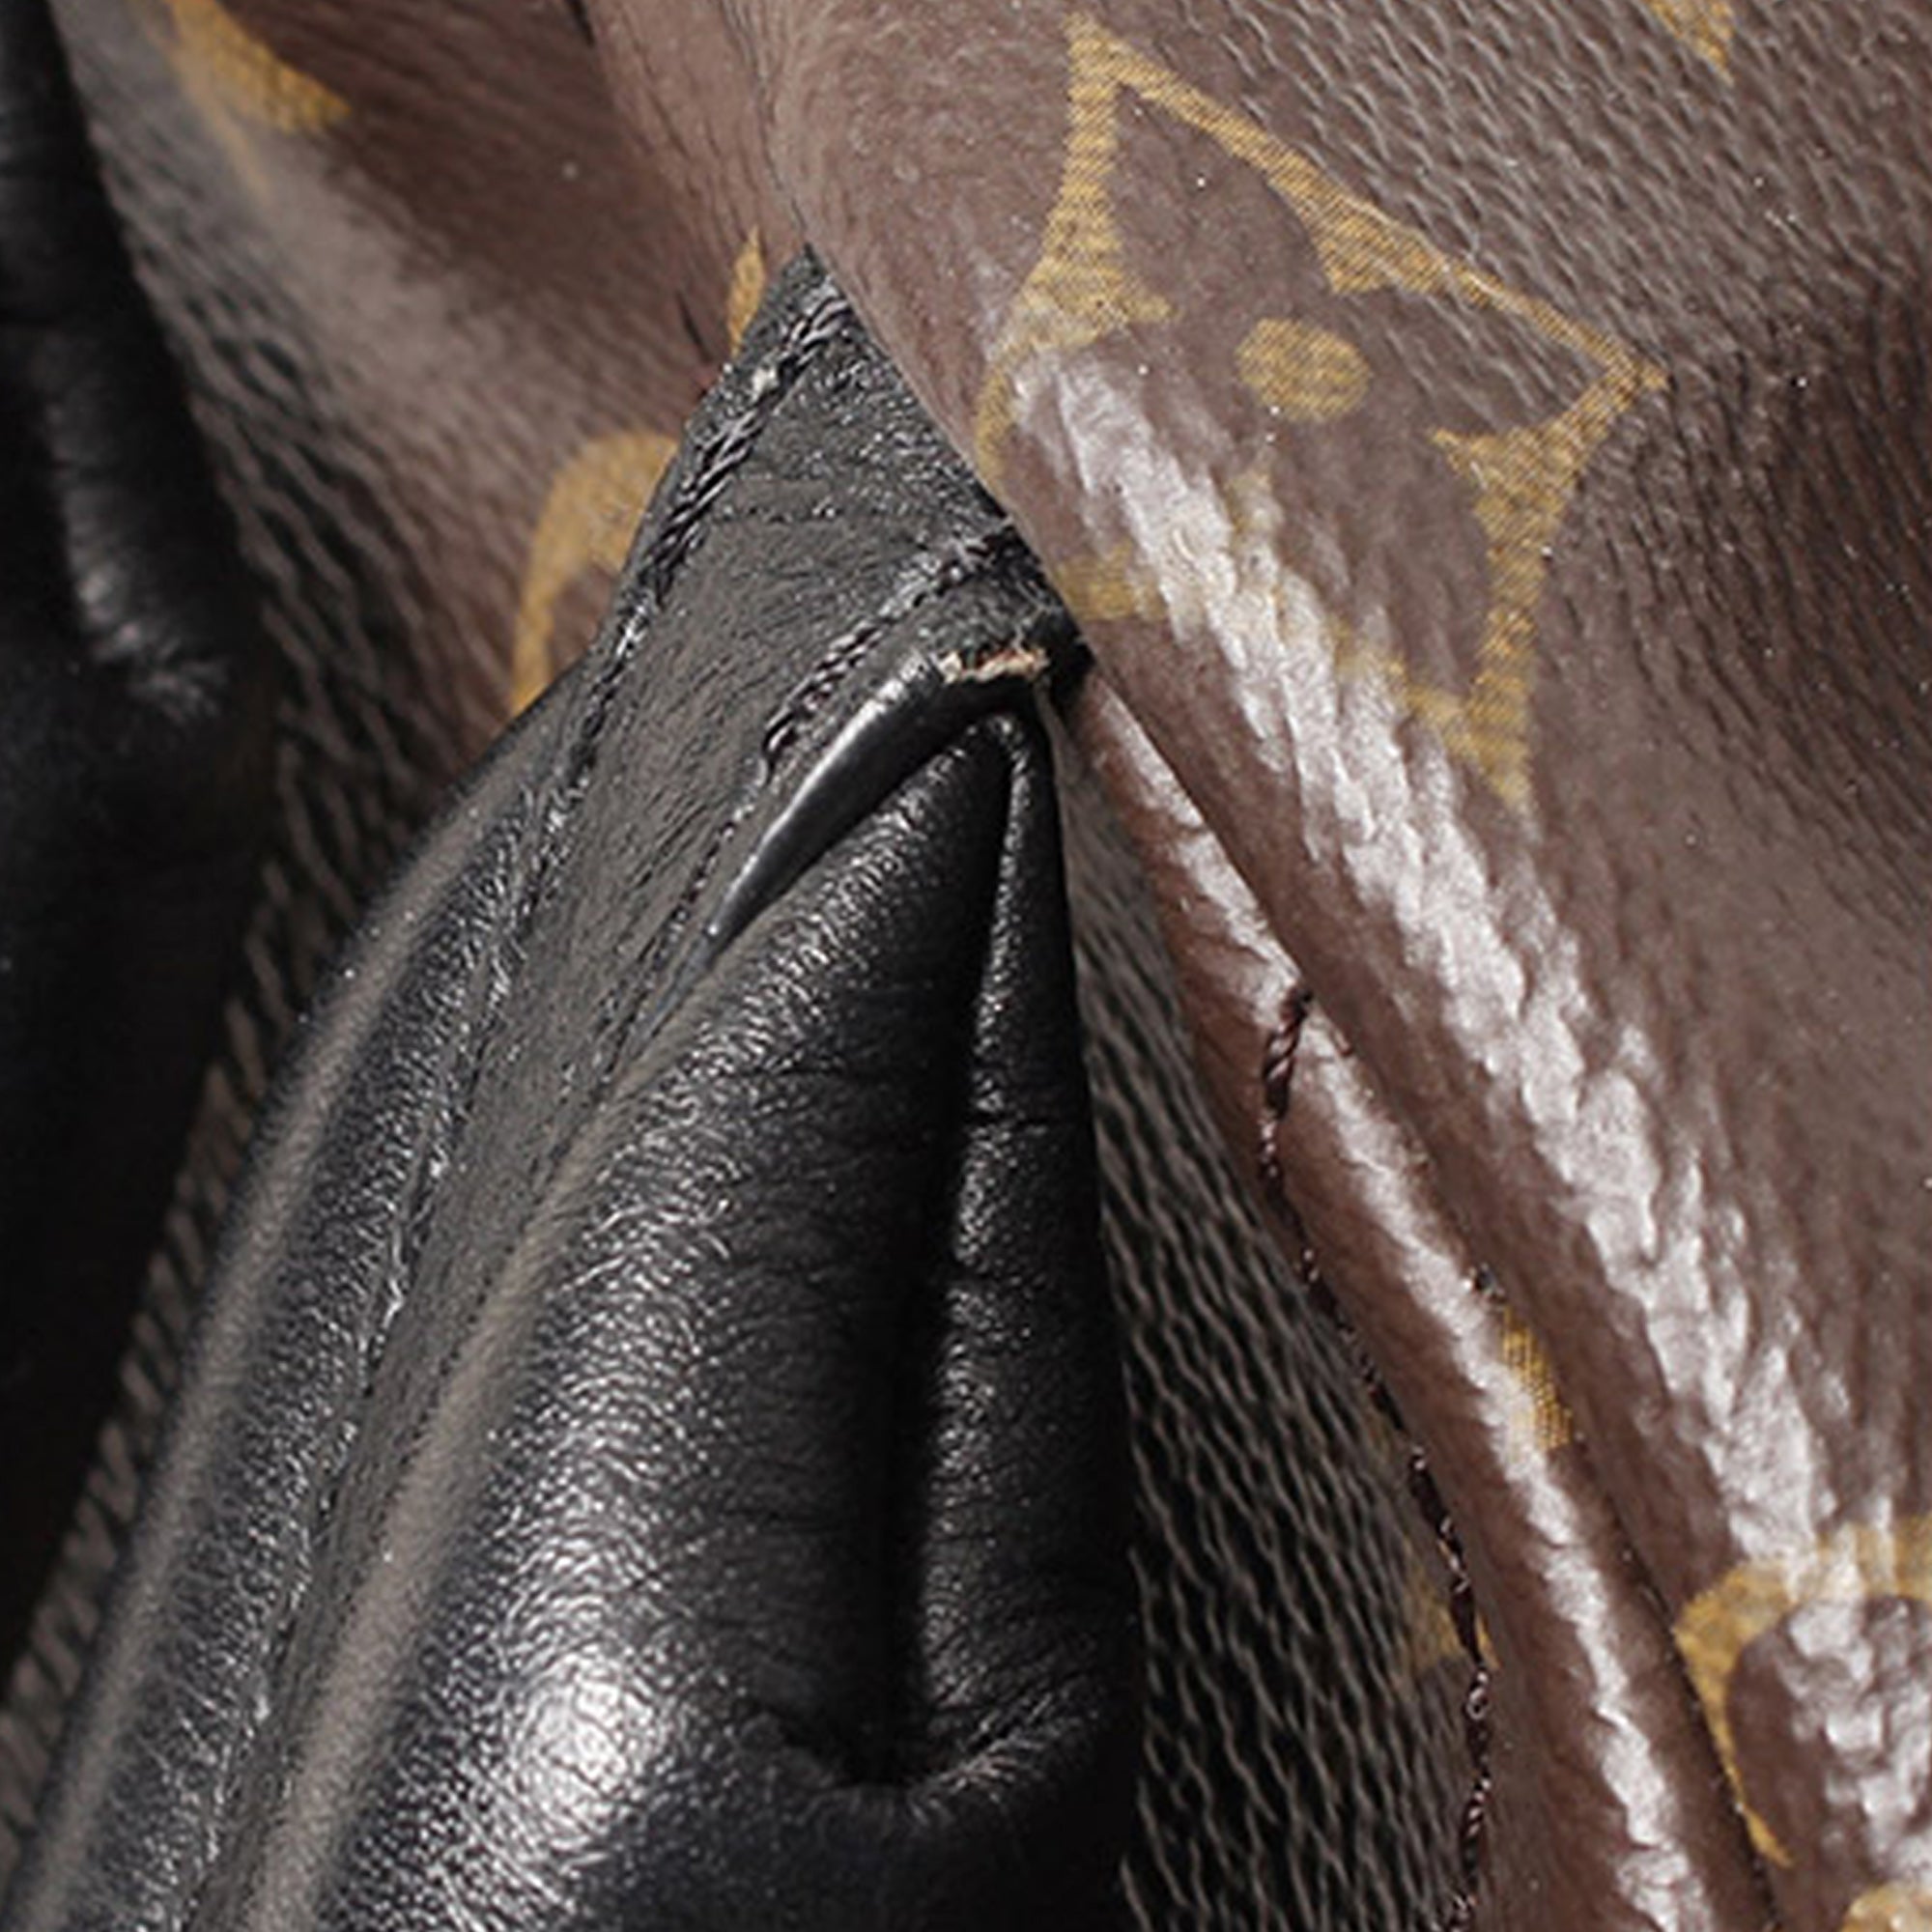 Bags, Louis Vuitton Palm Spring Pm Reverse